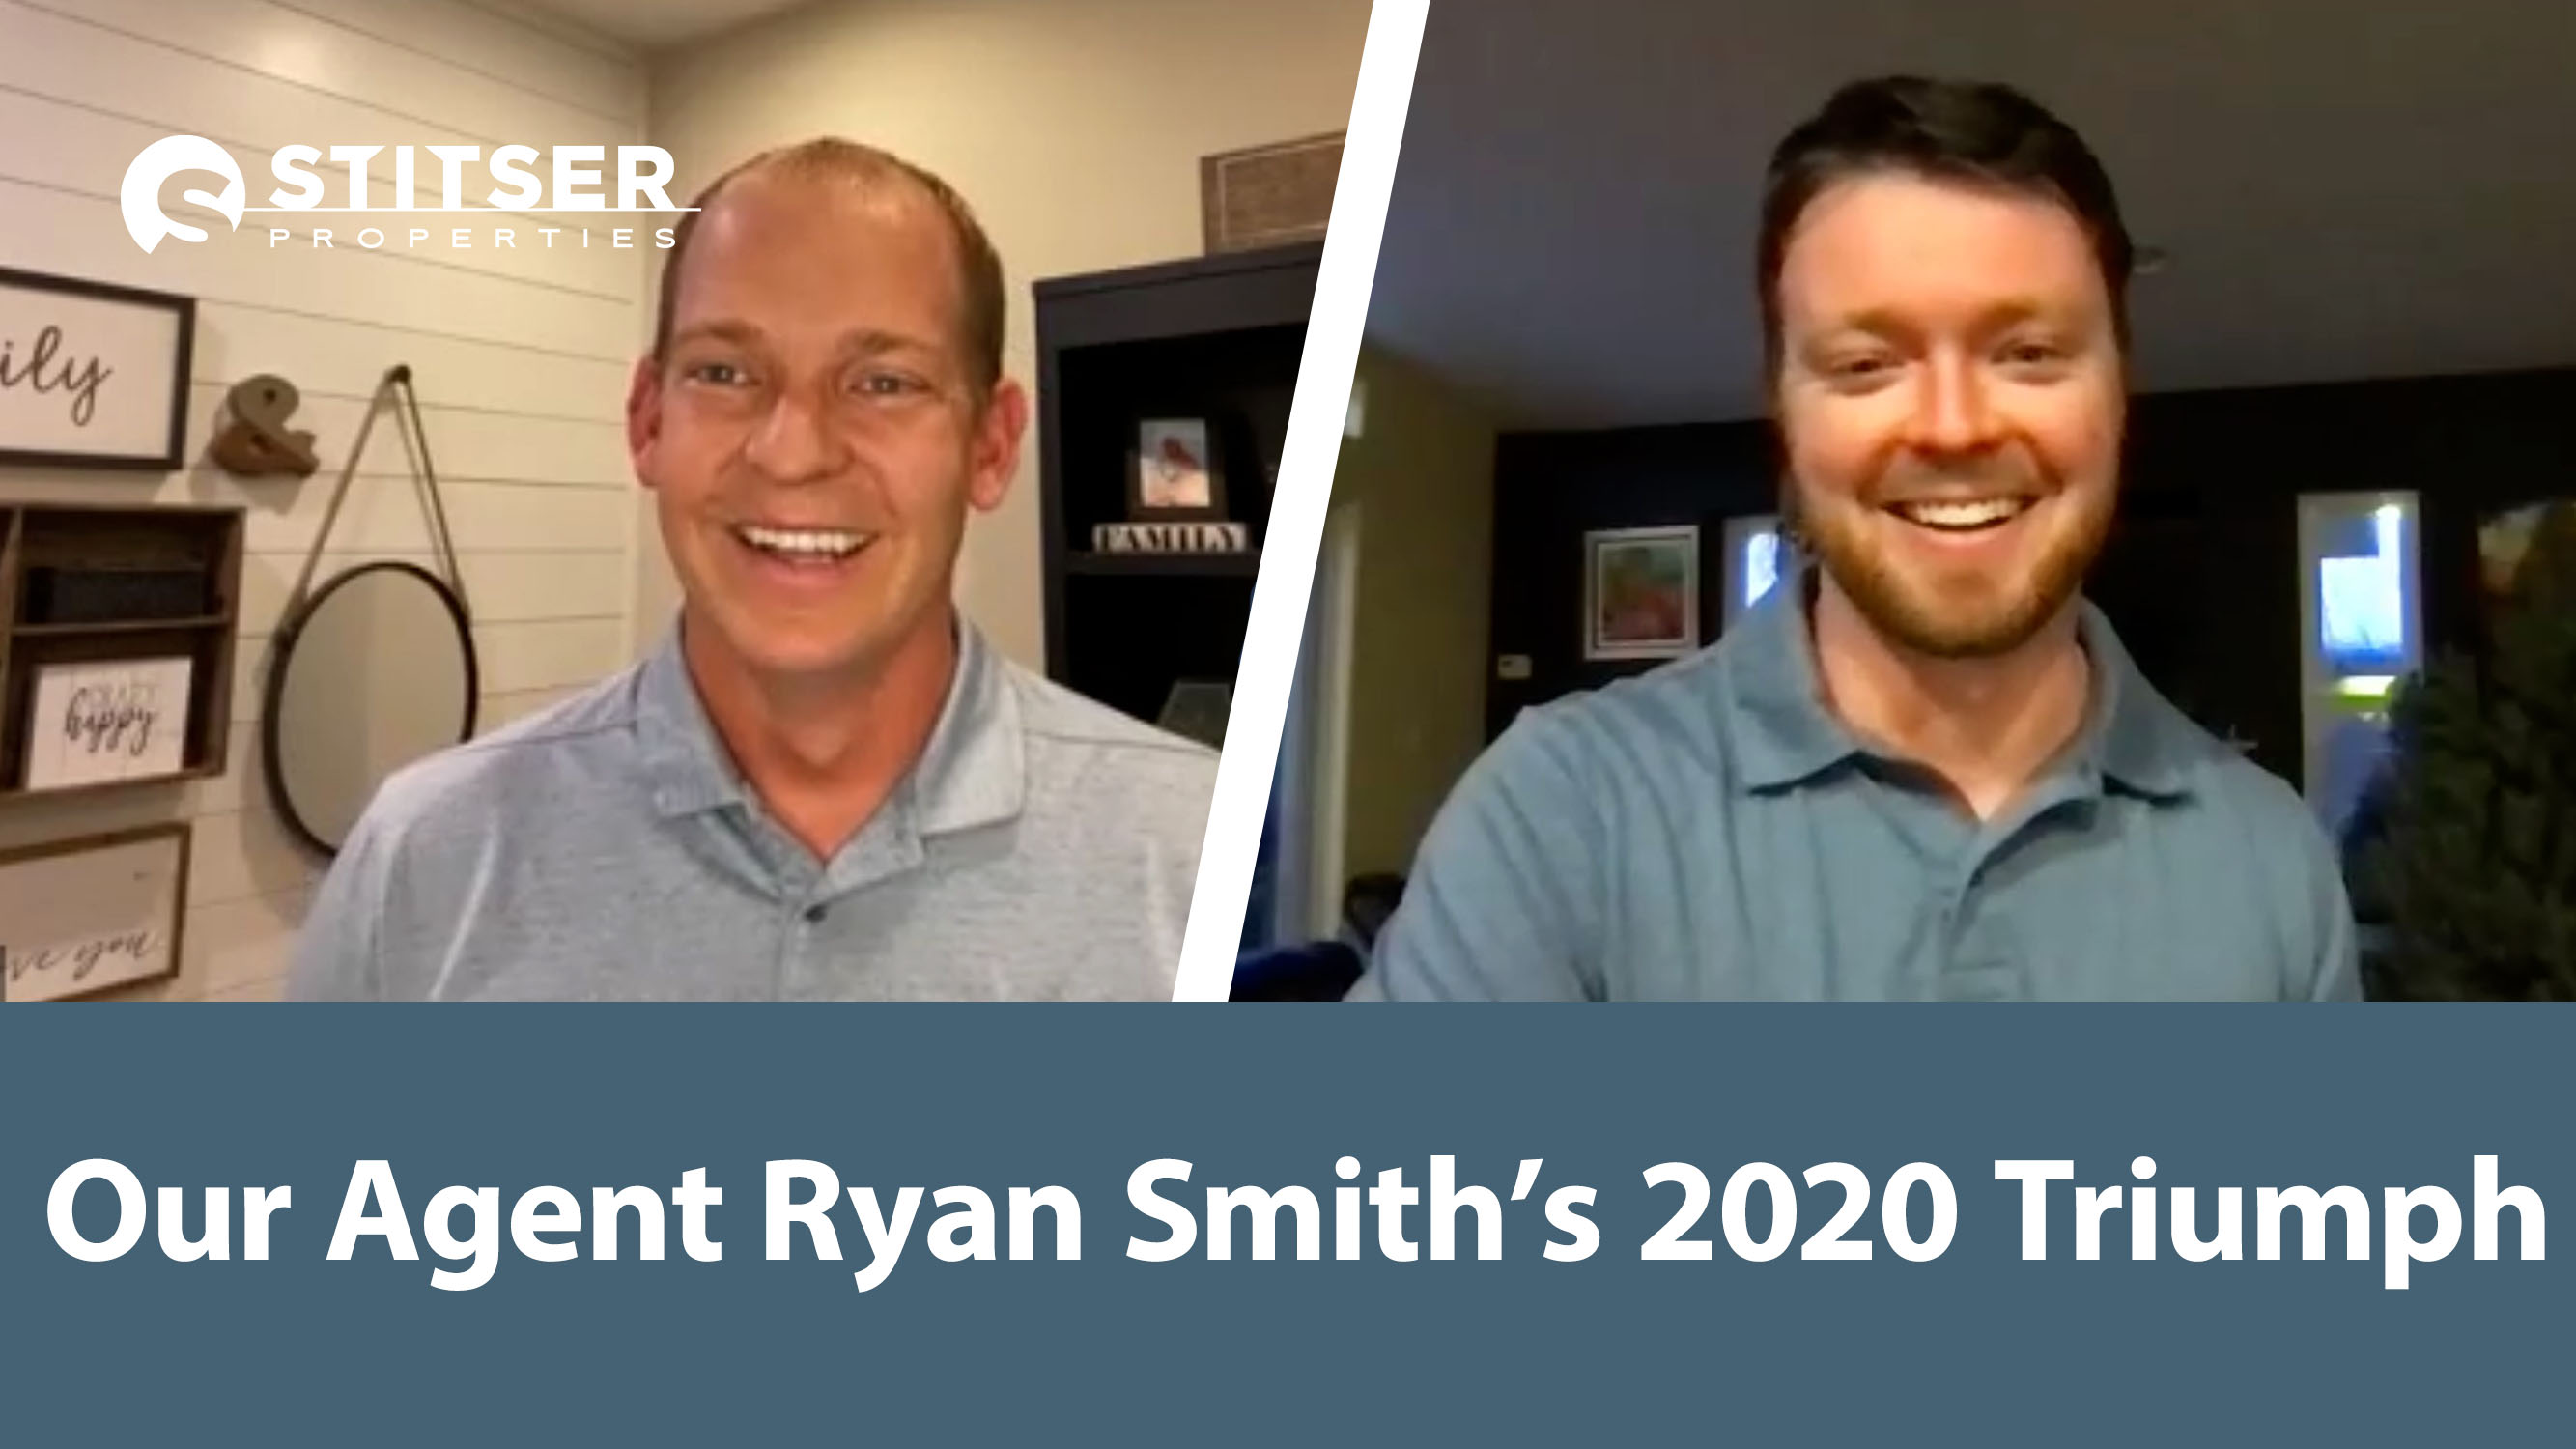 Q: What Is Rising Agent Ryan Smith’s Secret?